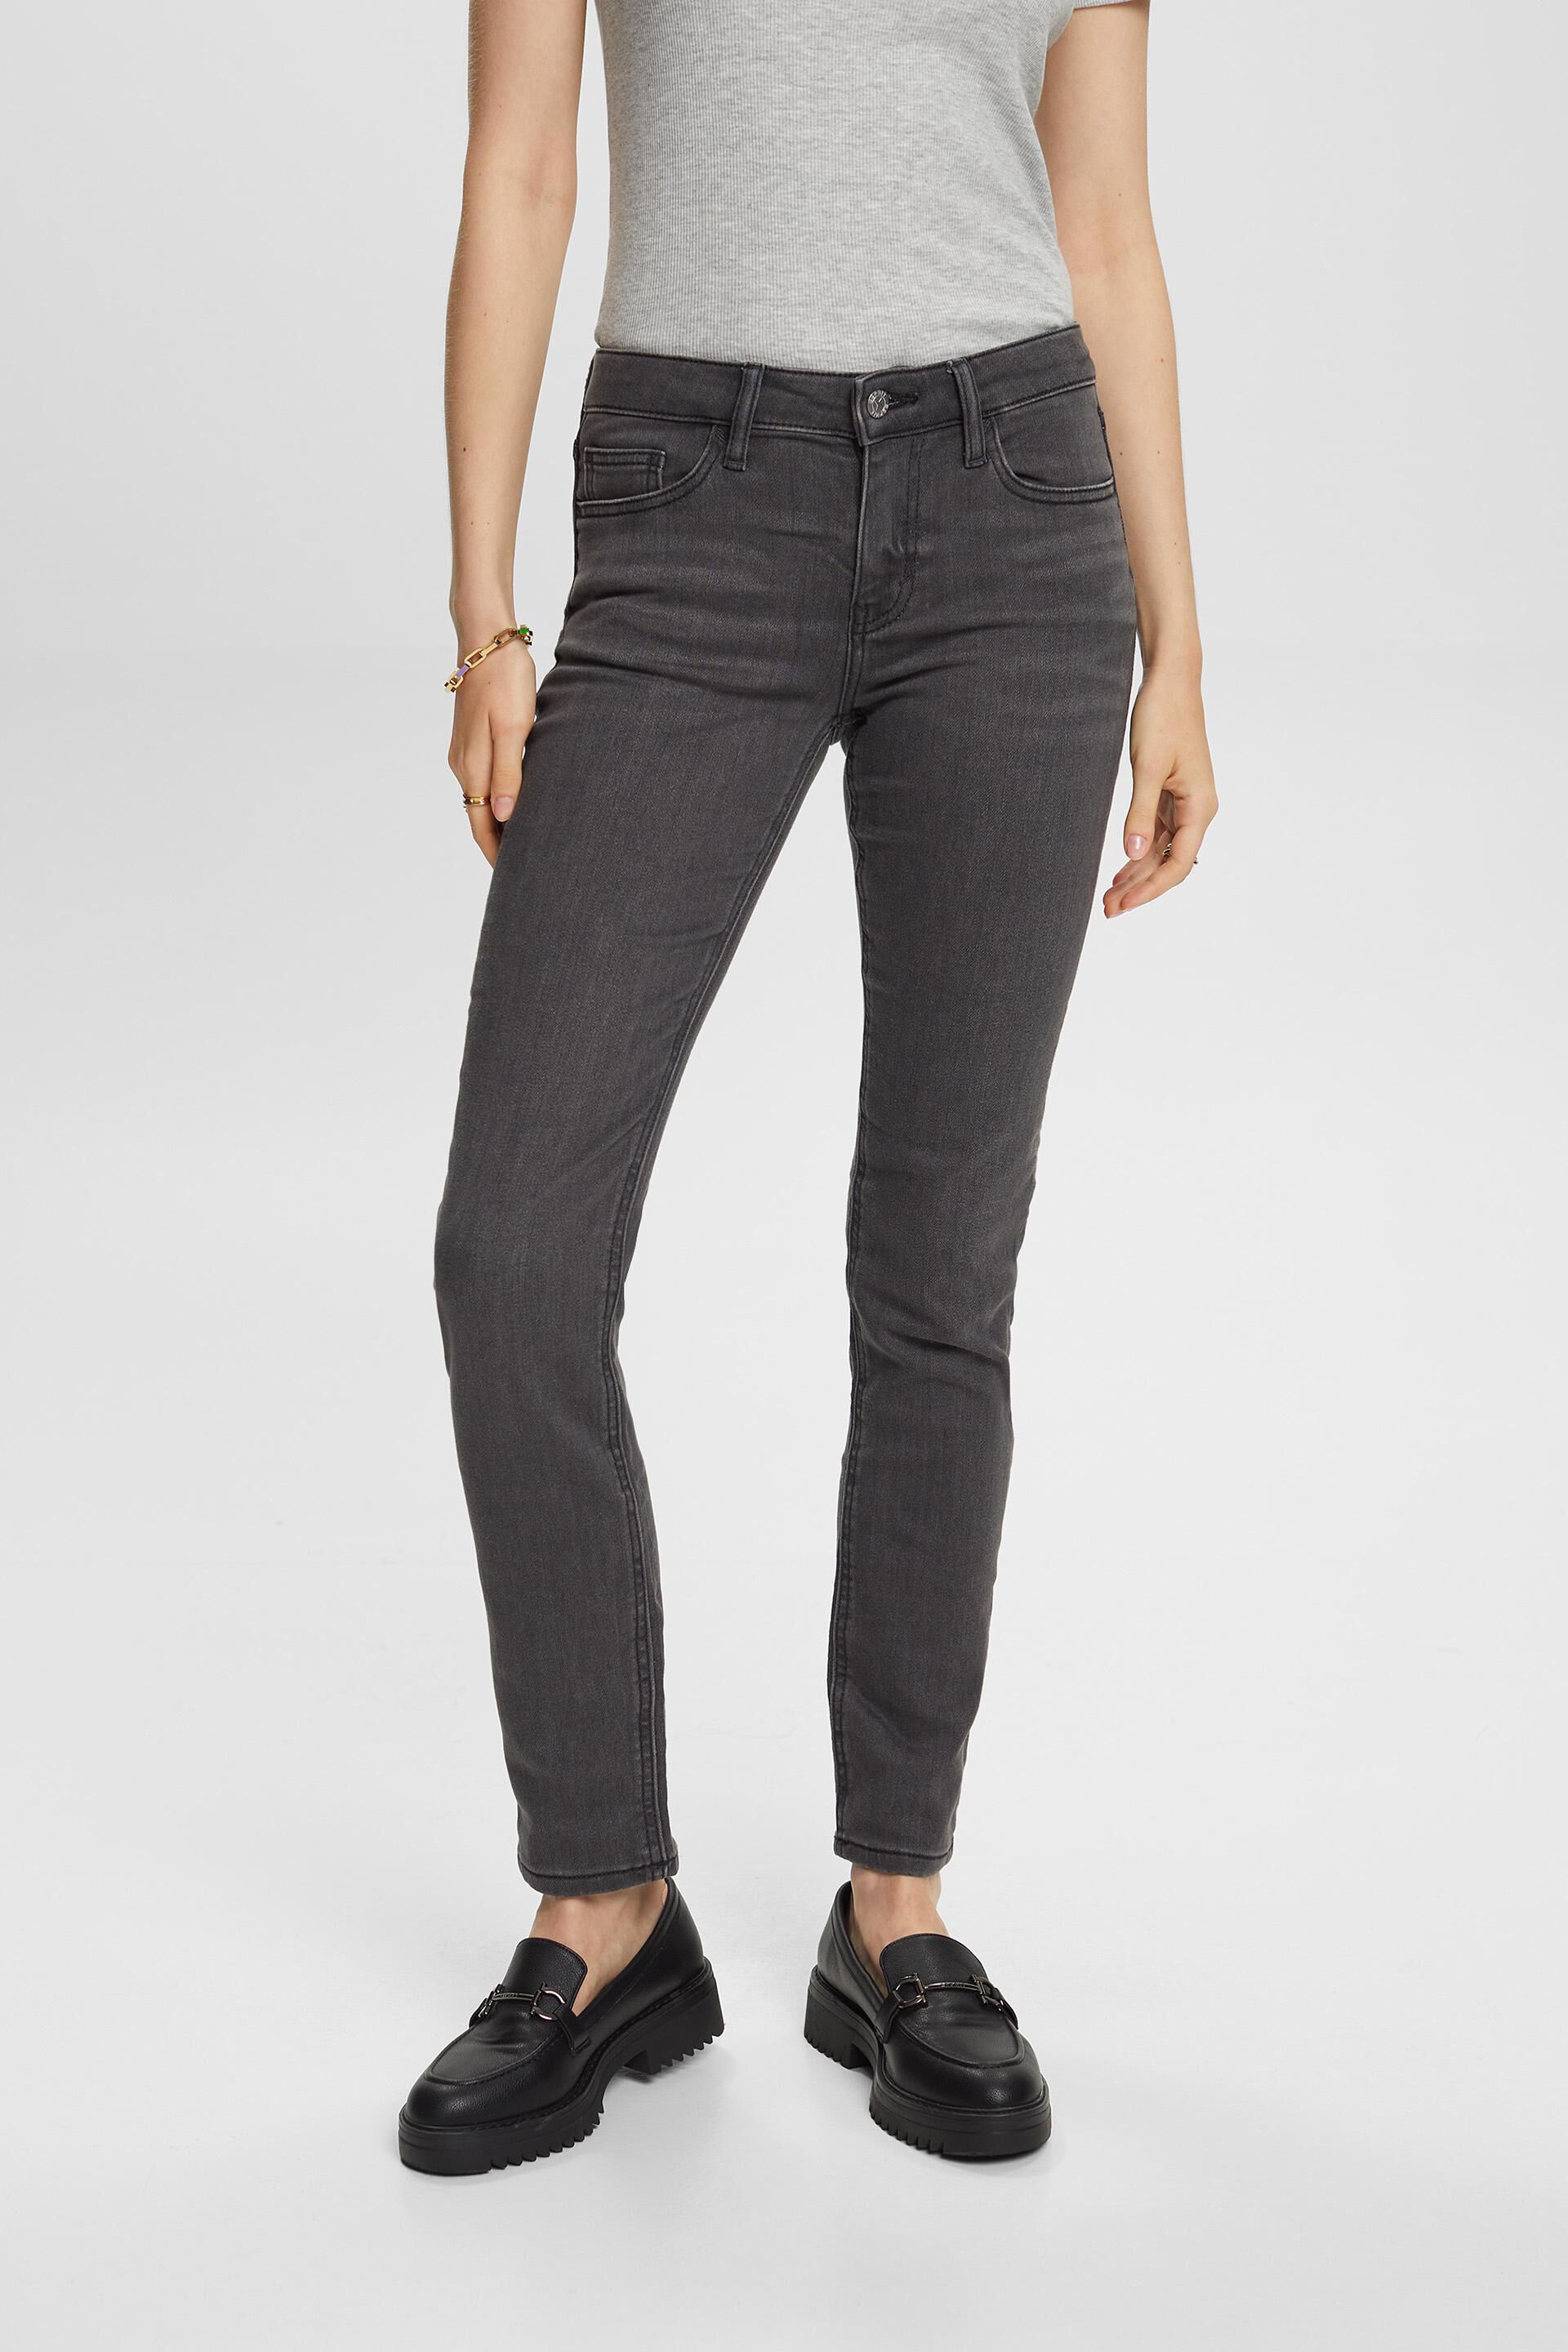 Esprit fit stretch Slim jeans